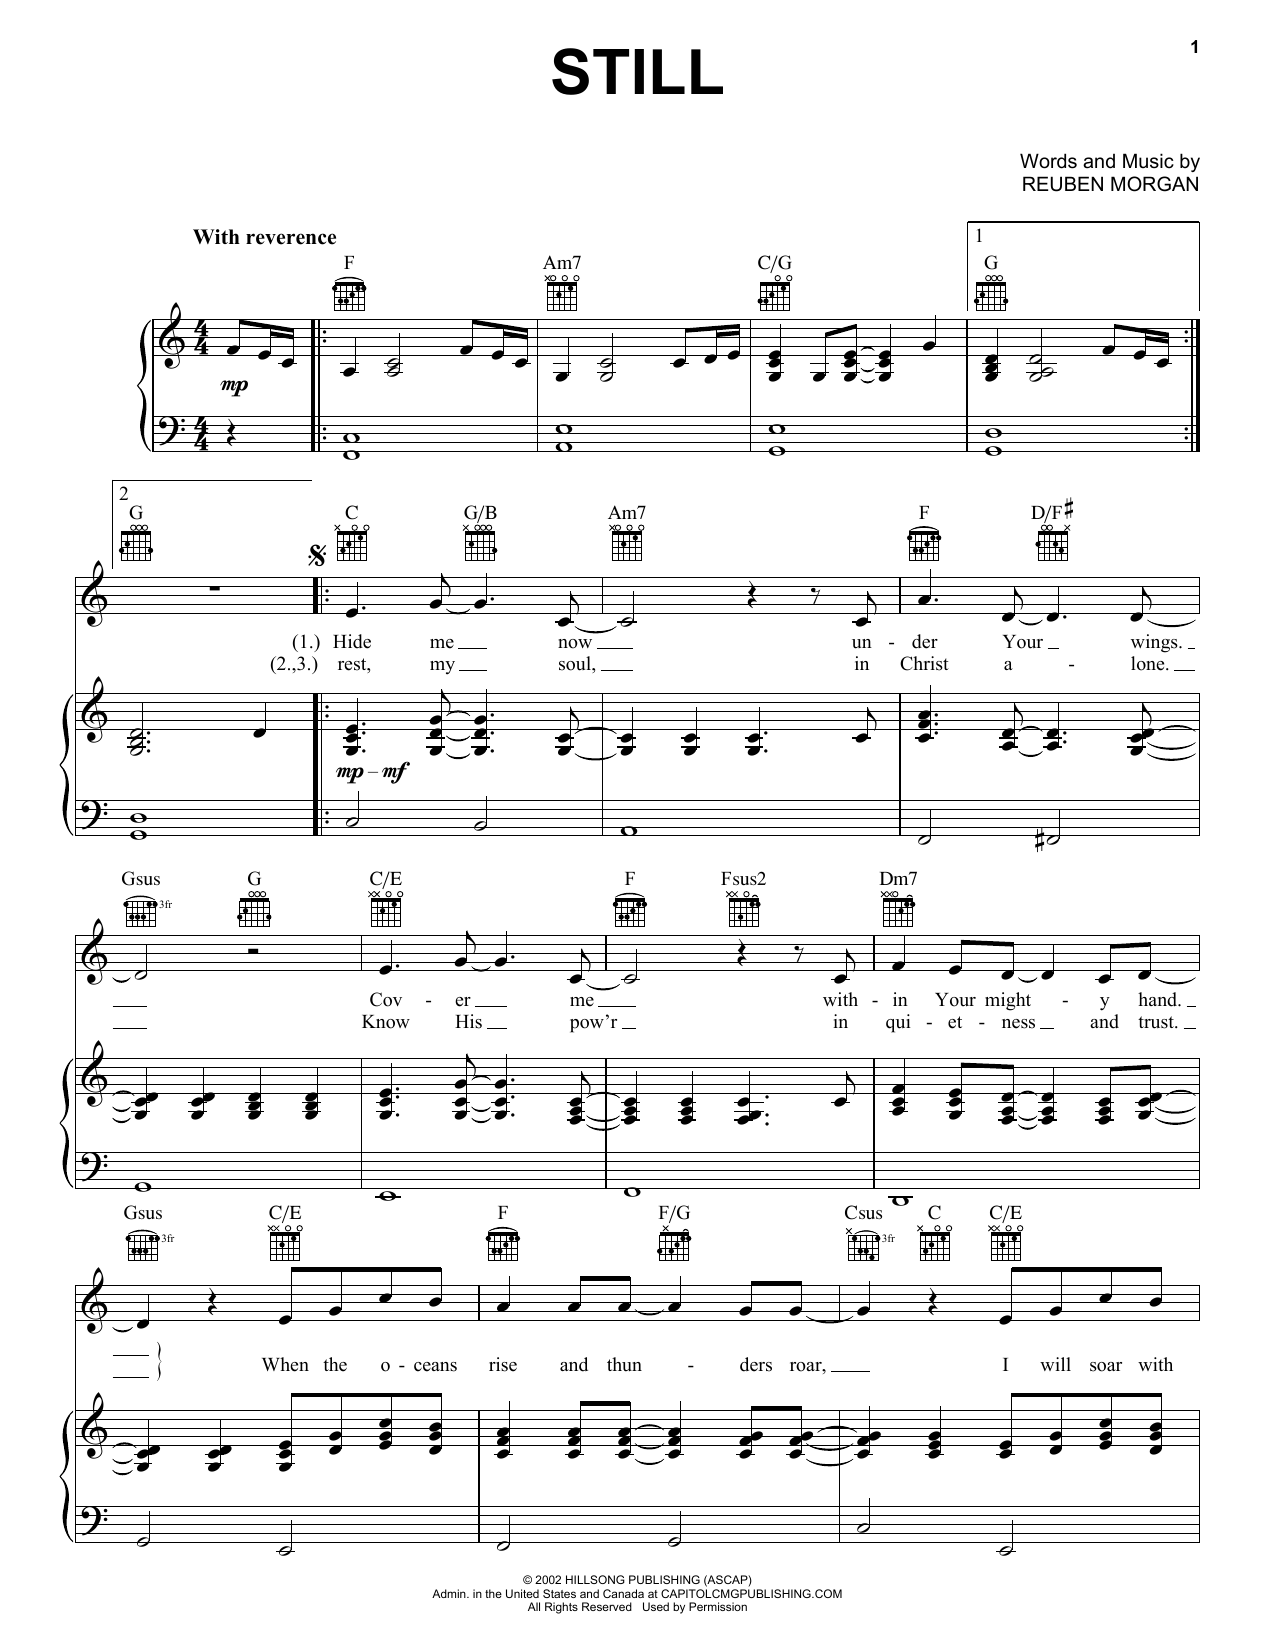 Reuben Morgan Still Sheet Music Notes & Chords for Easy Piano - Download or Print PDF